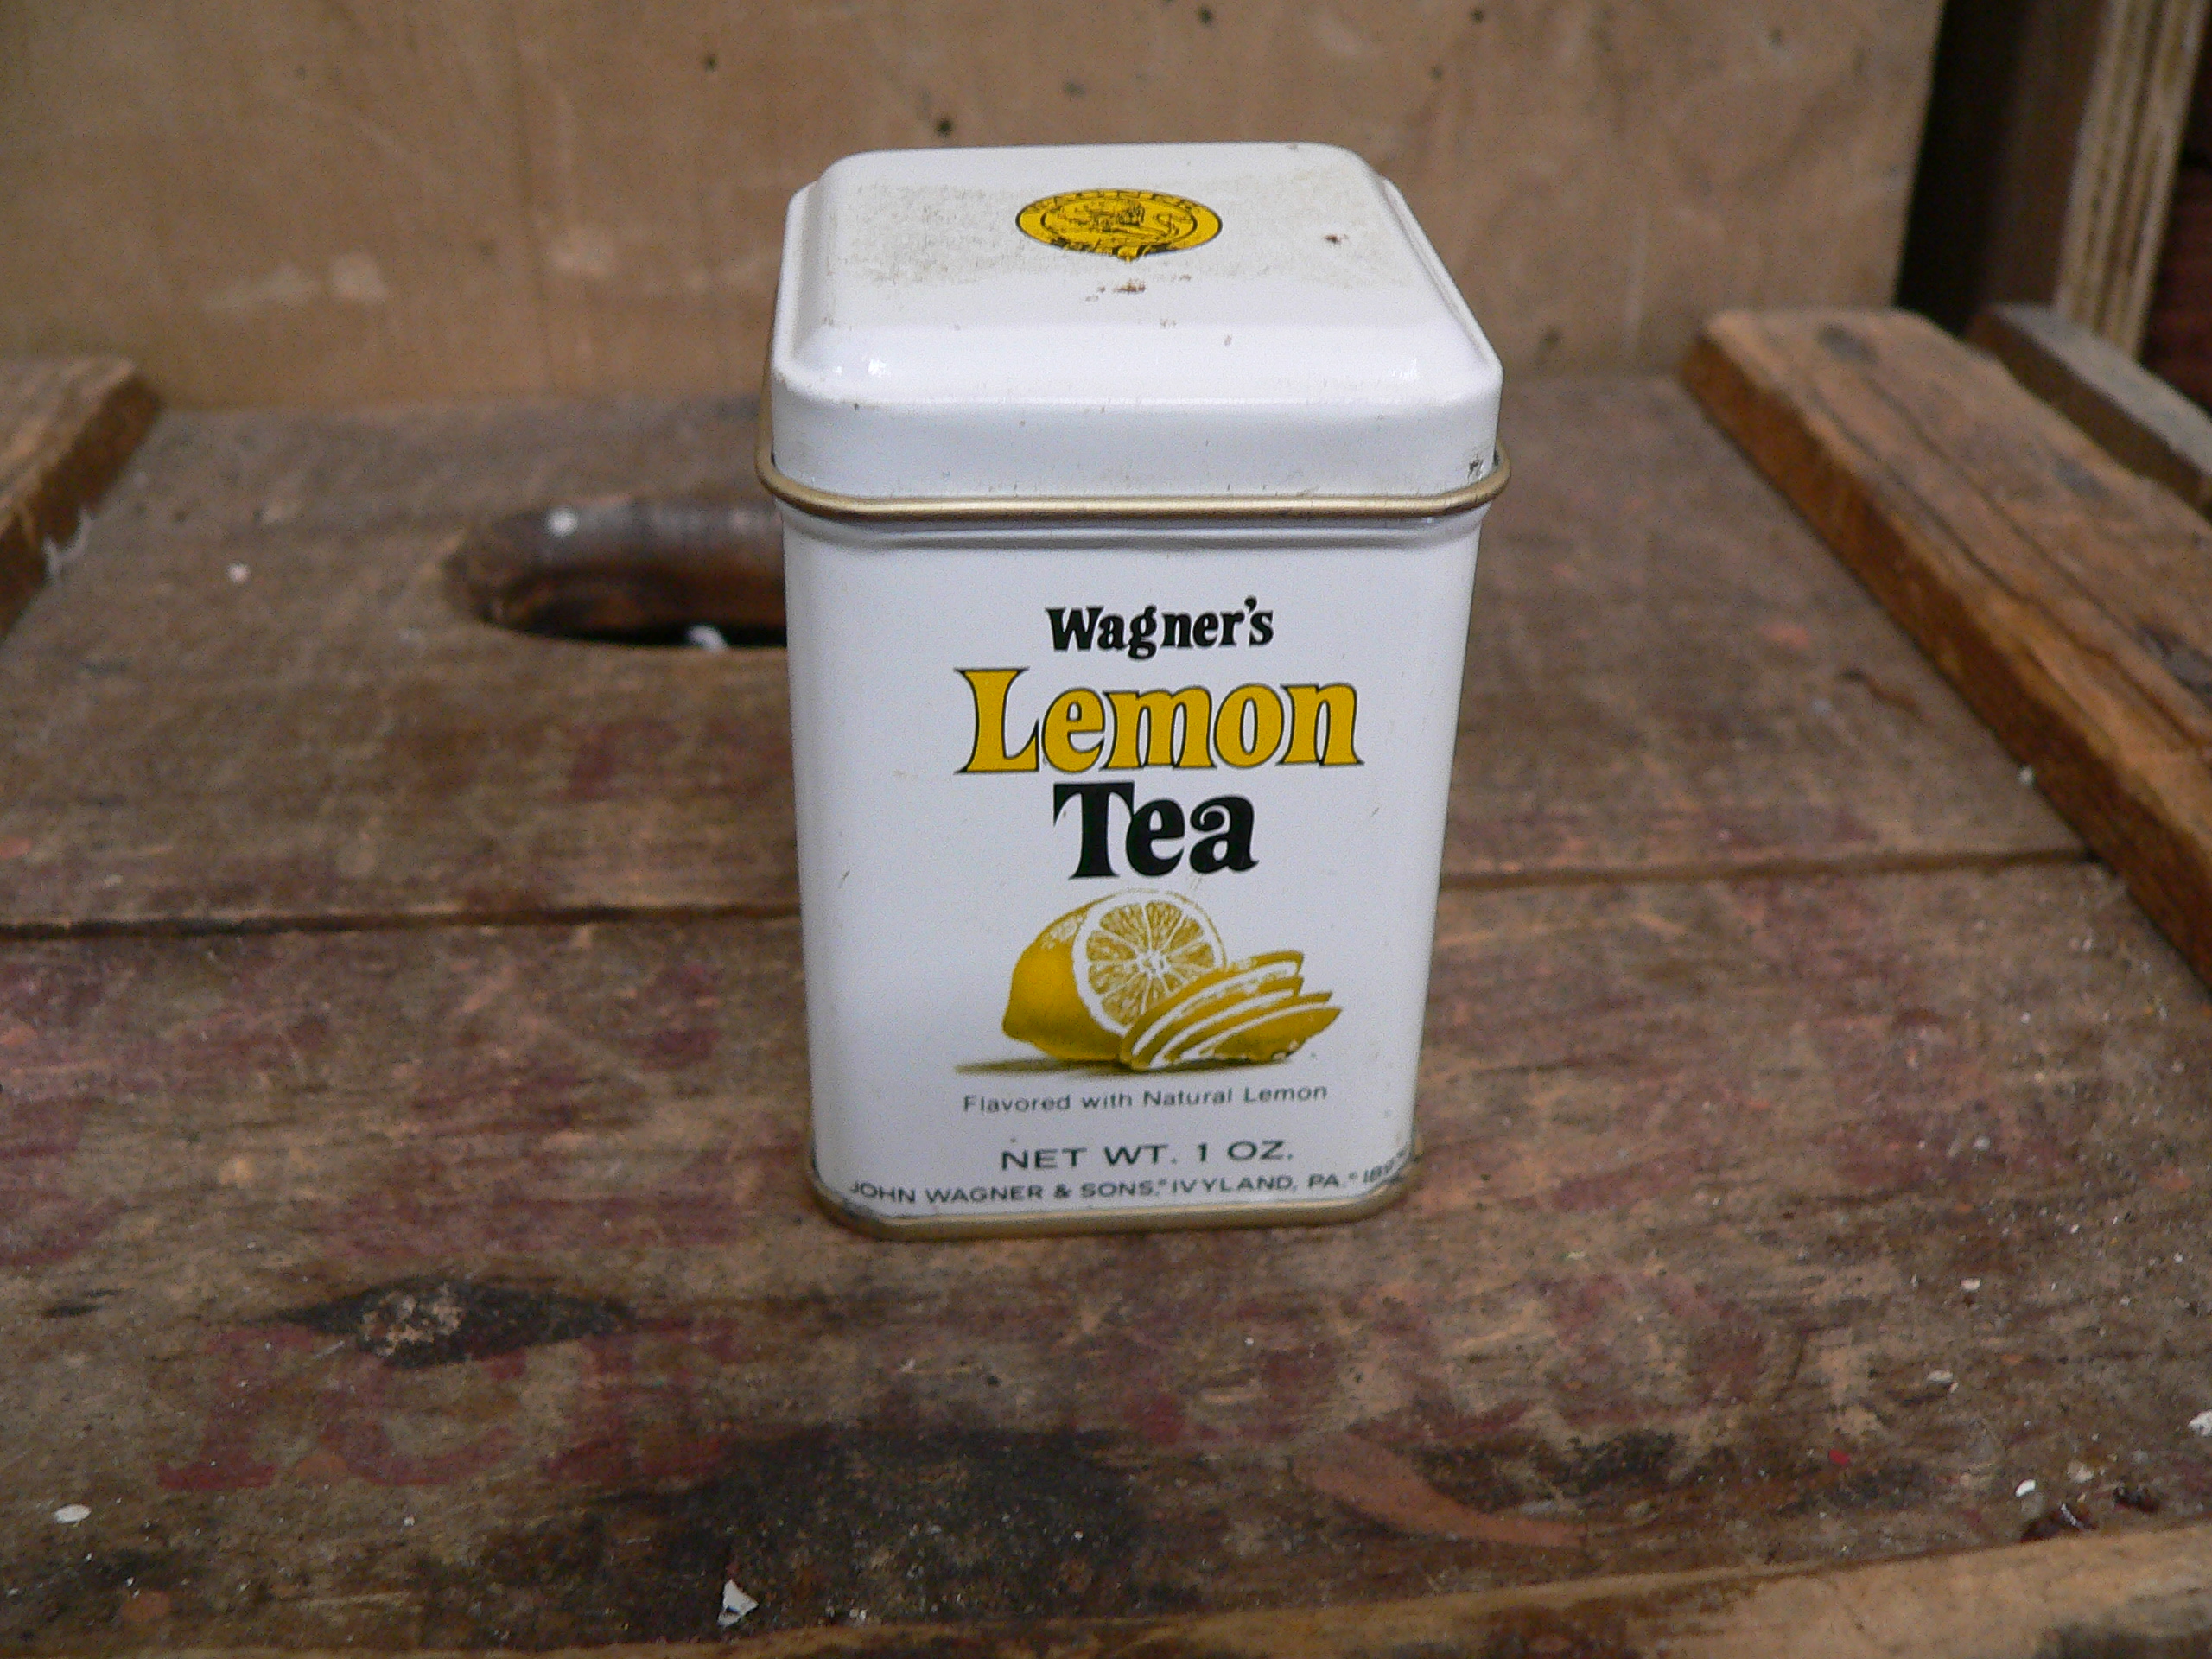 Canne wagner's lemon tea # 6208.3